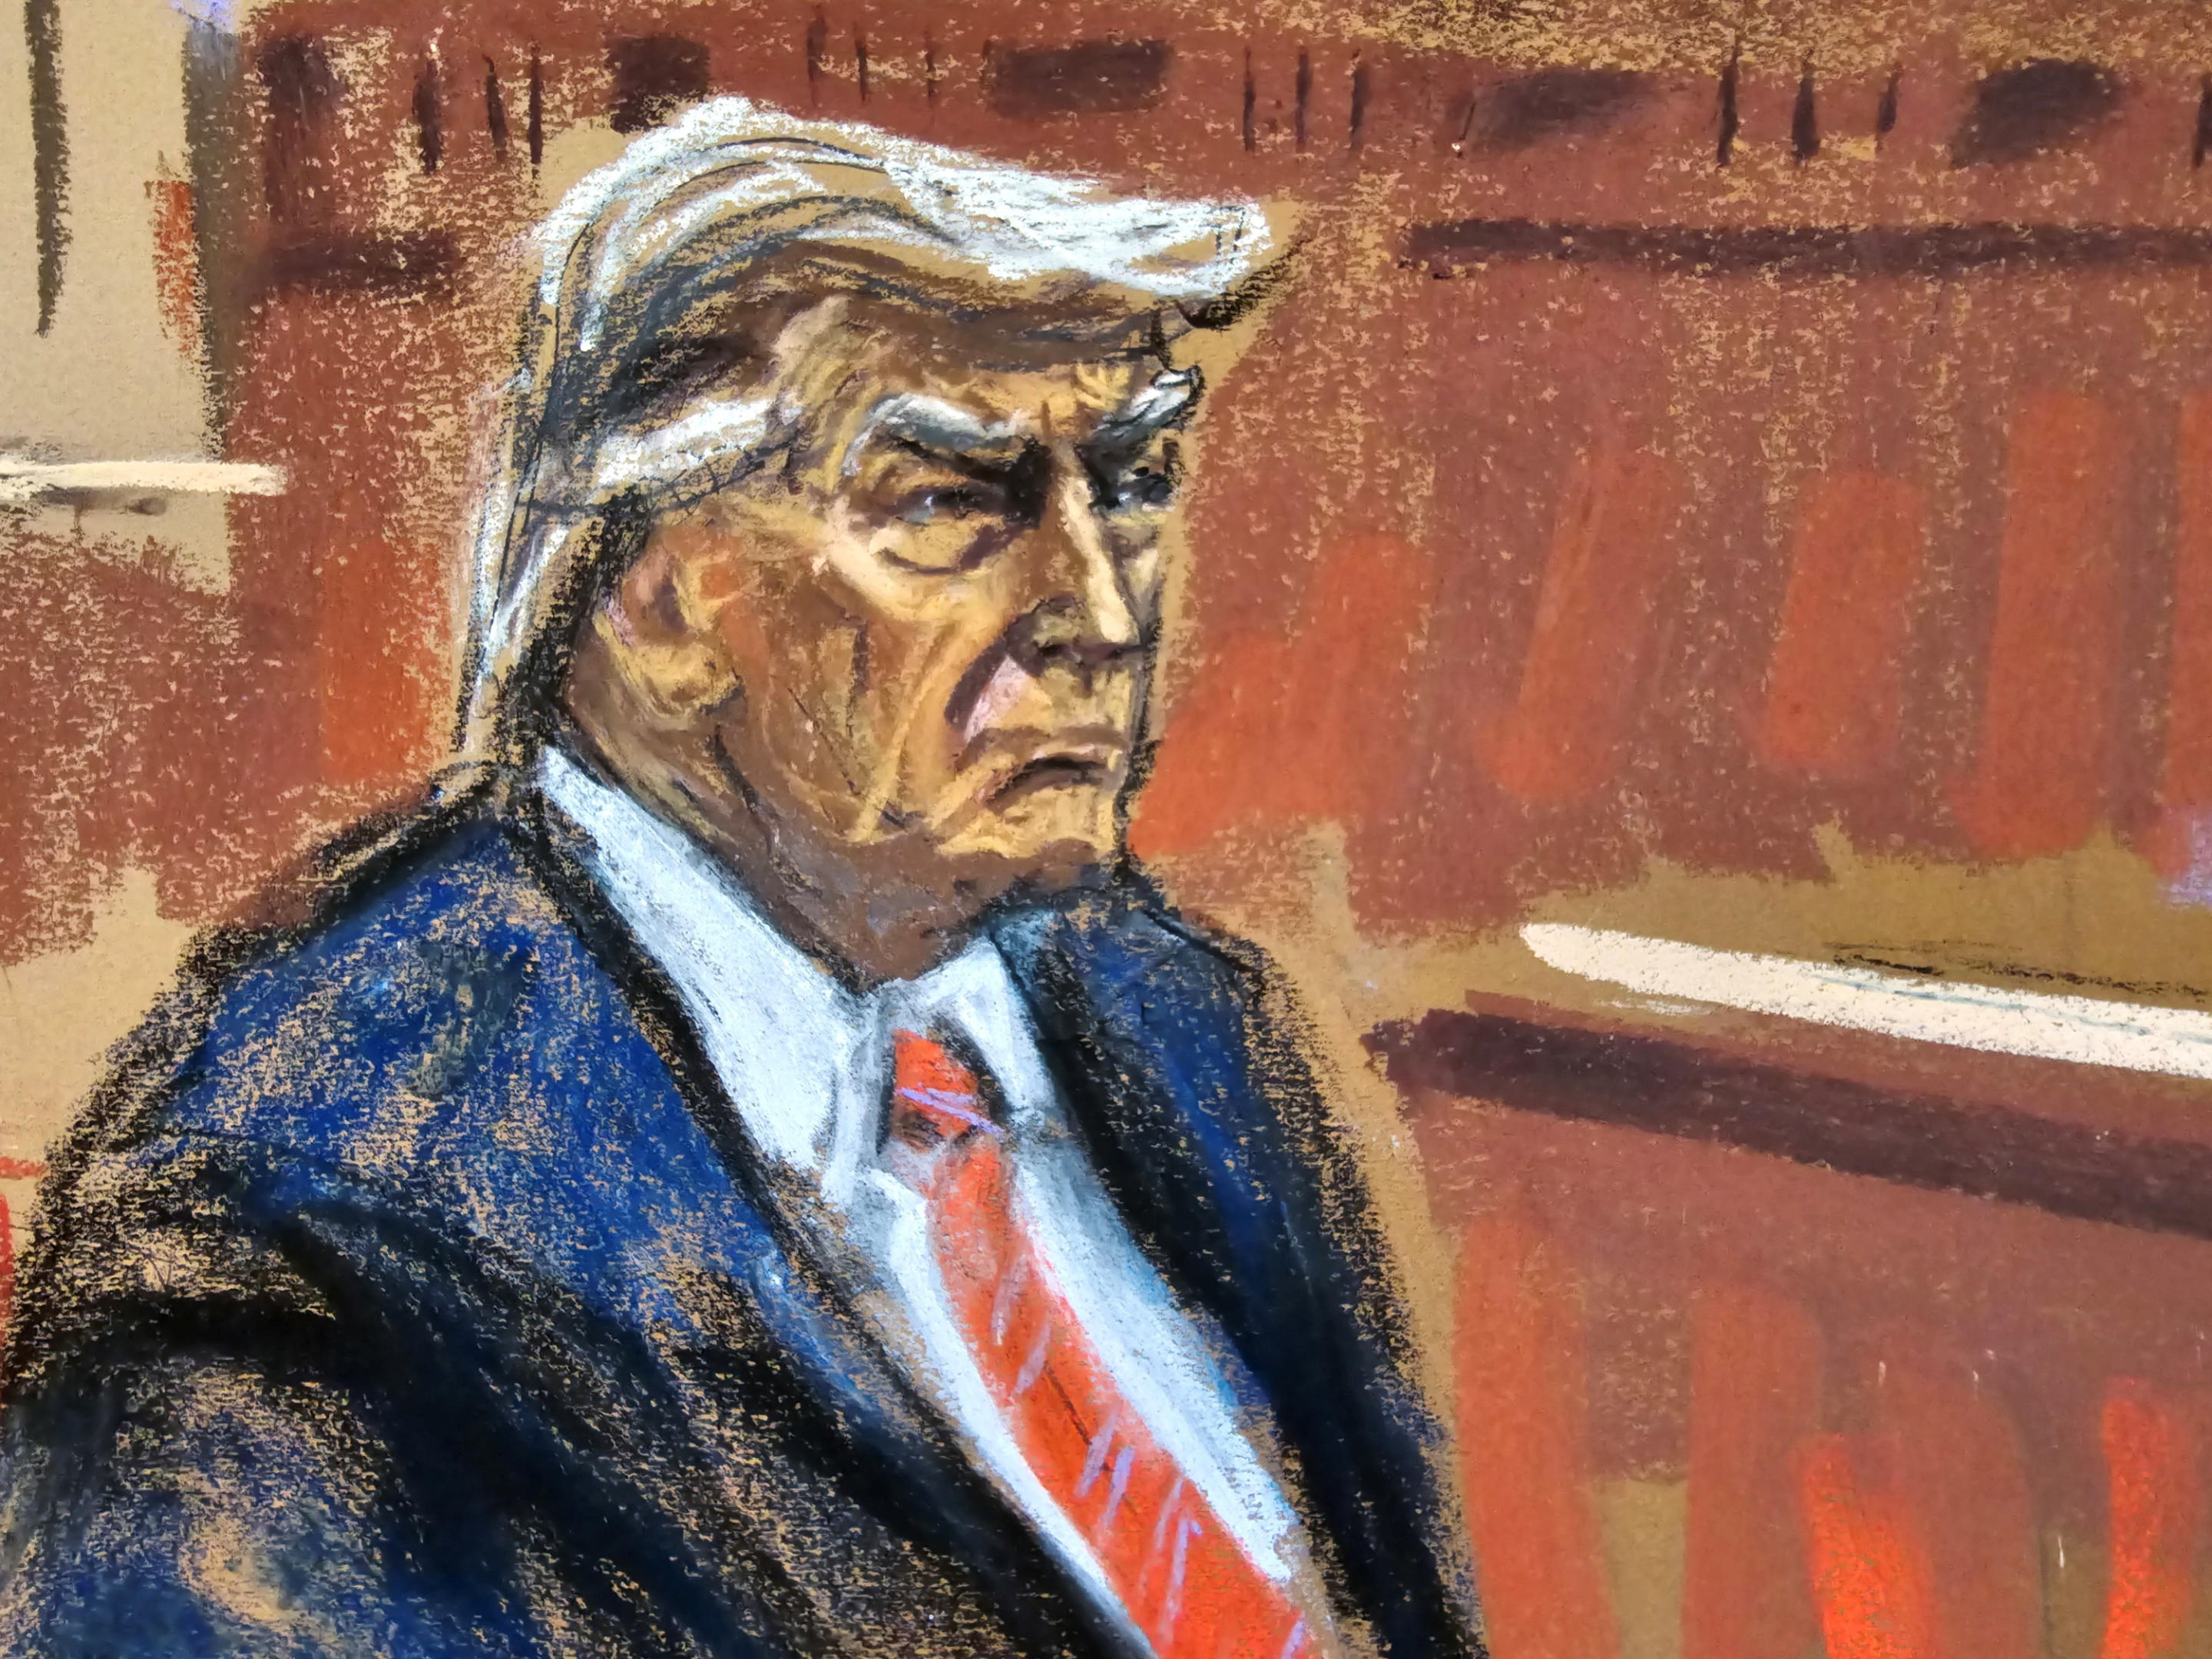 Trump listens as the final jurors are sworn in on April 19. (Jane Rosenberg/Reuters)